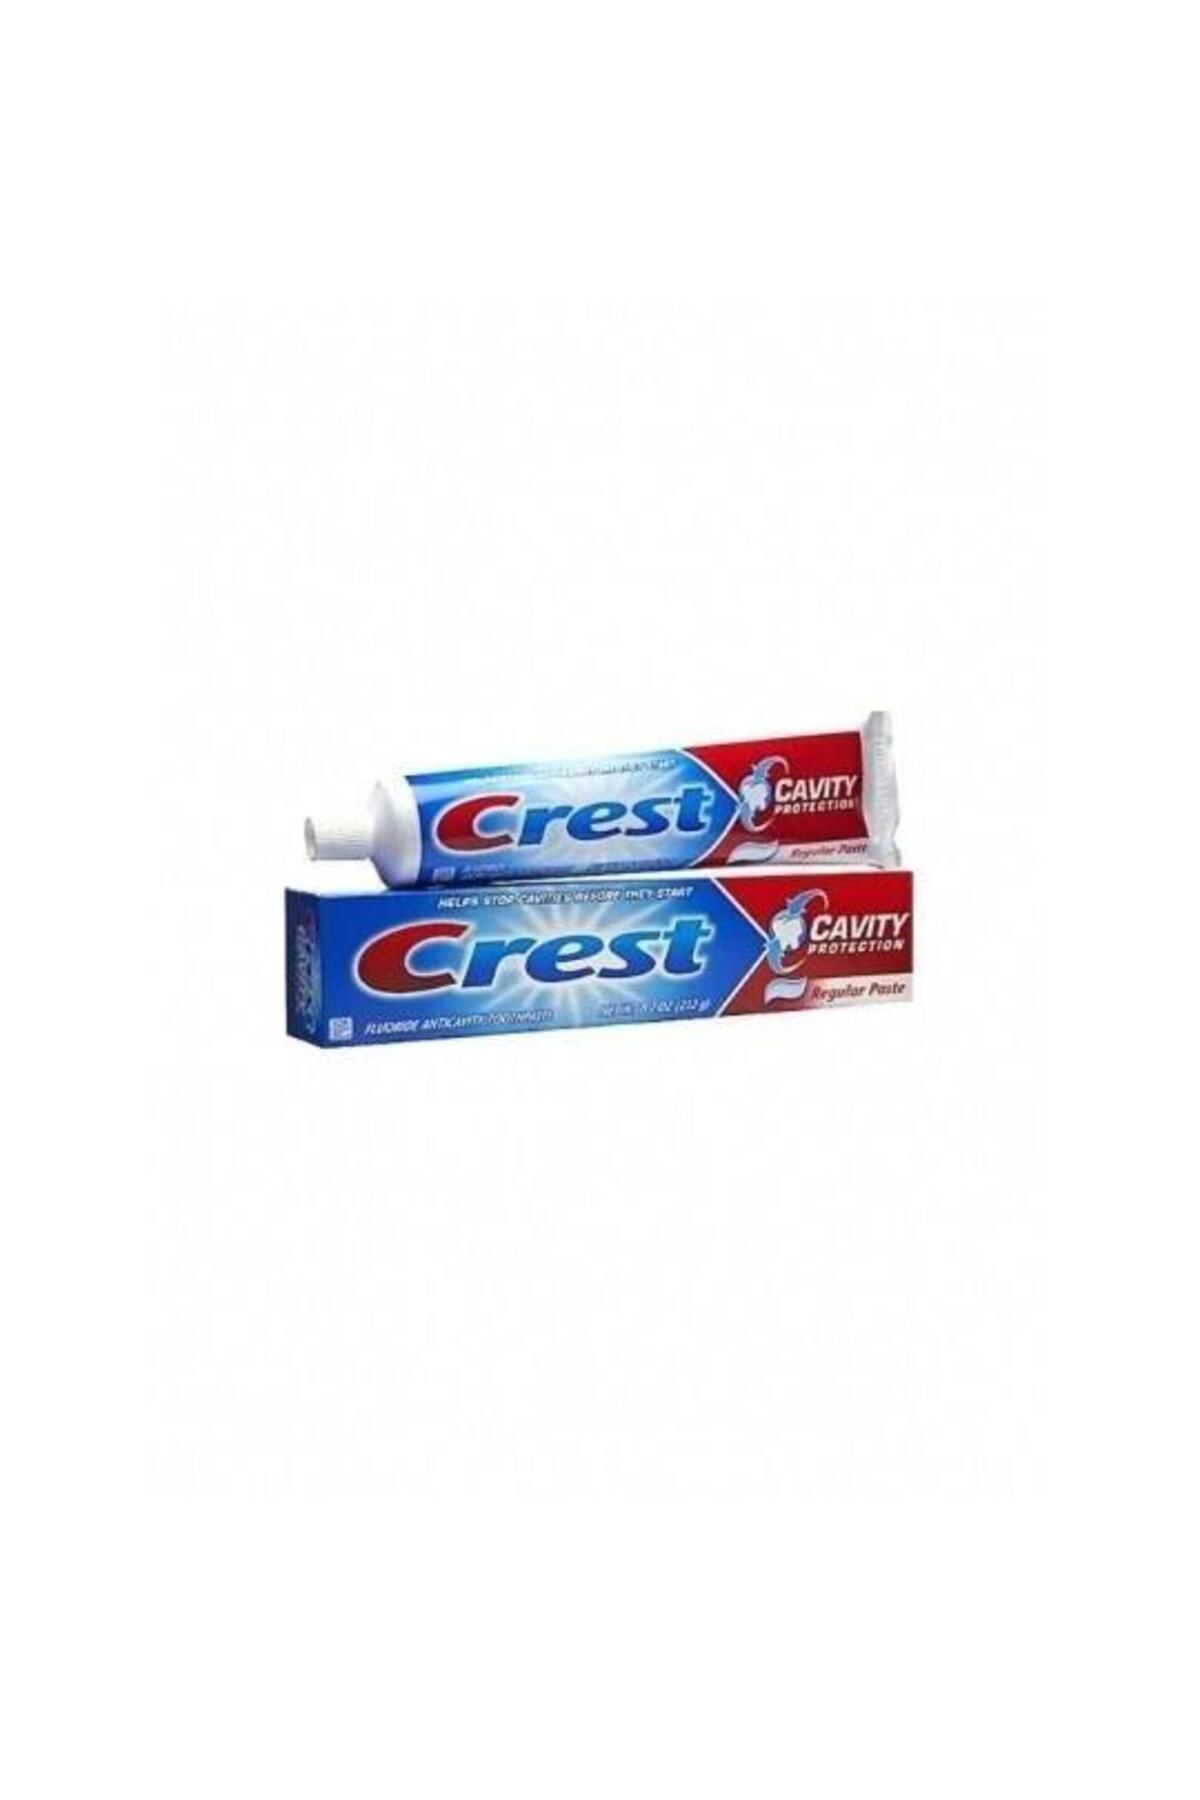 CREST Cavity Protection Regular Paste Diş Macunu 232gr